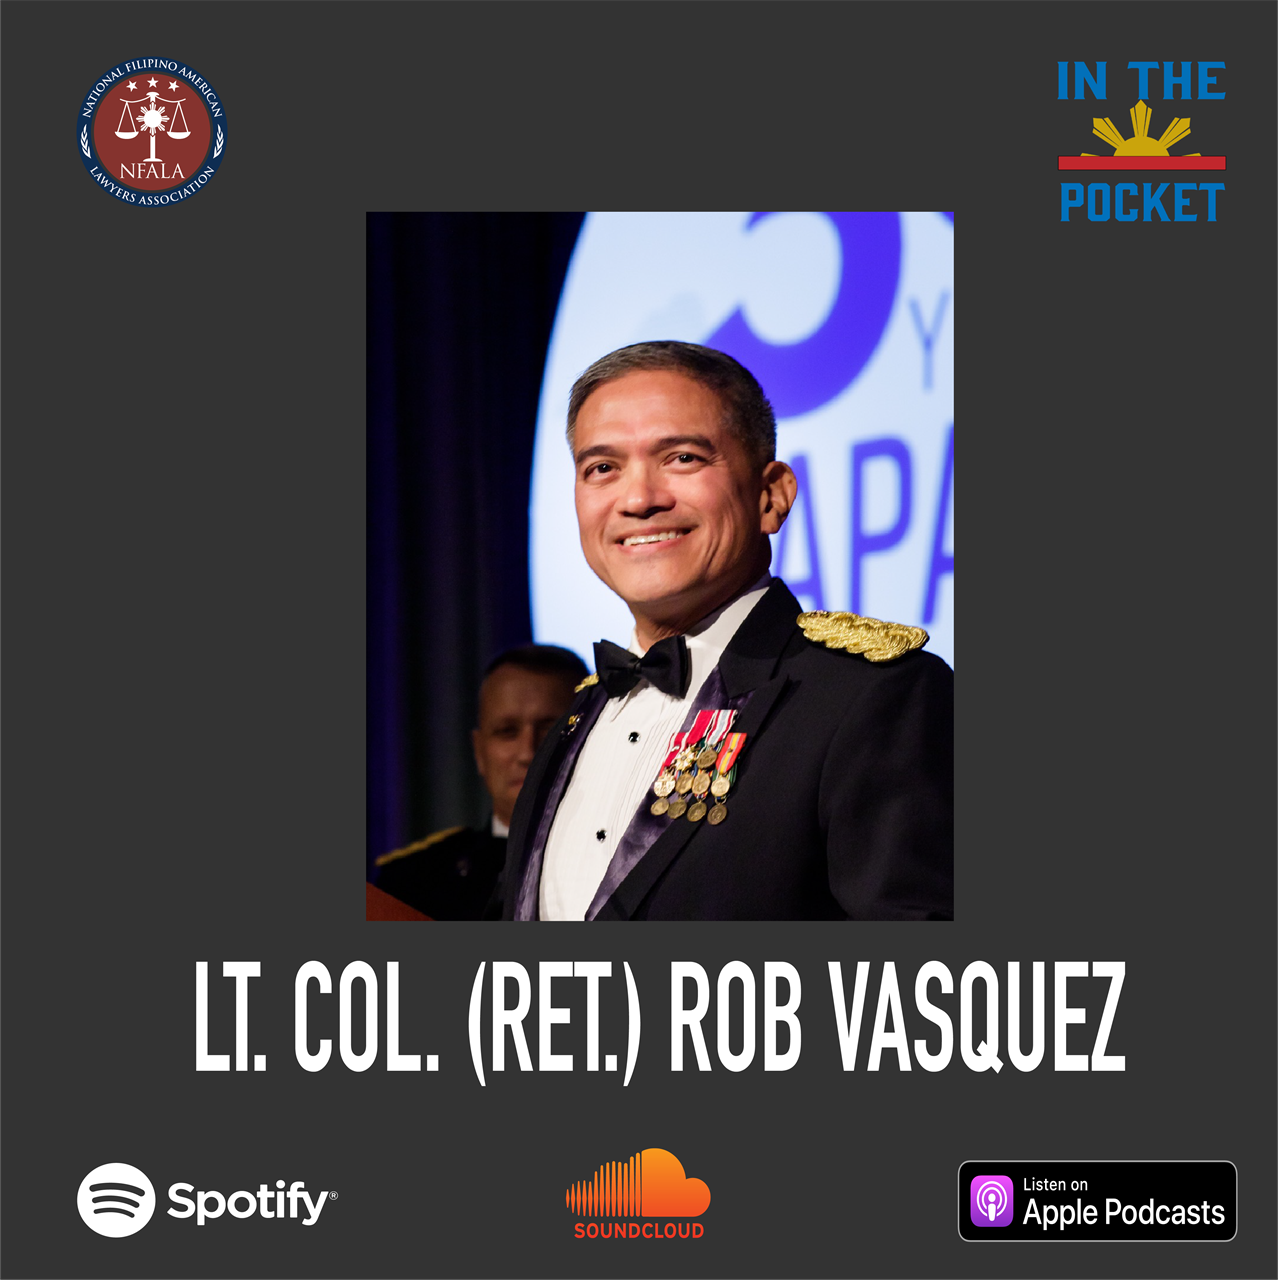 Episode 3: Lt. Col. (Ret.) Rob Vasquez